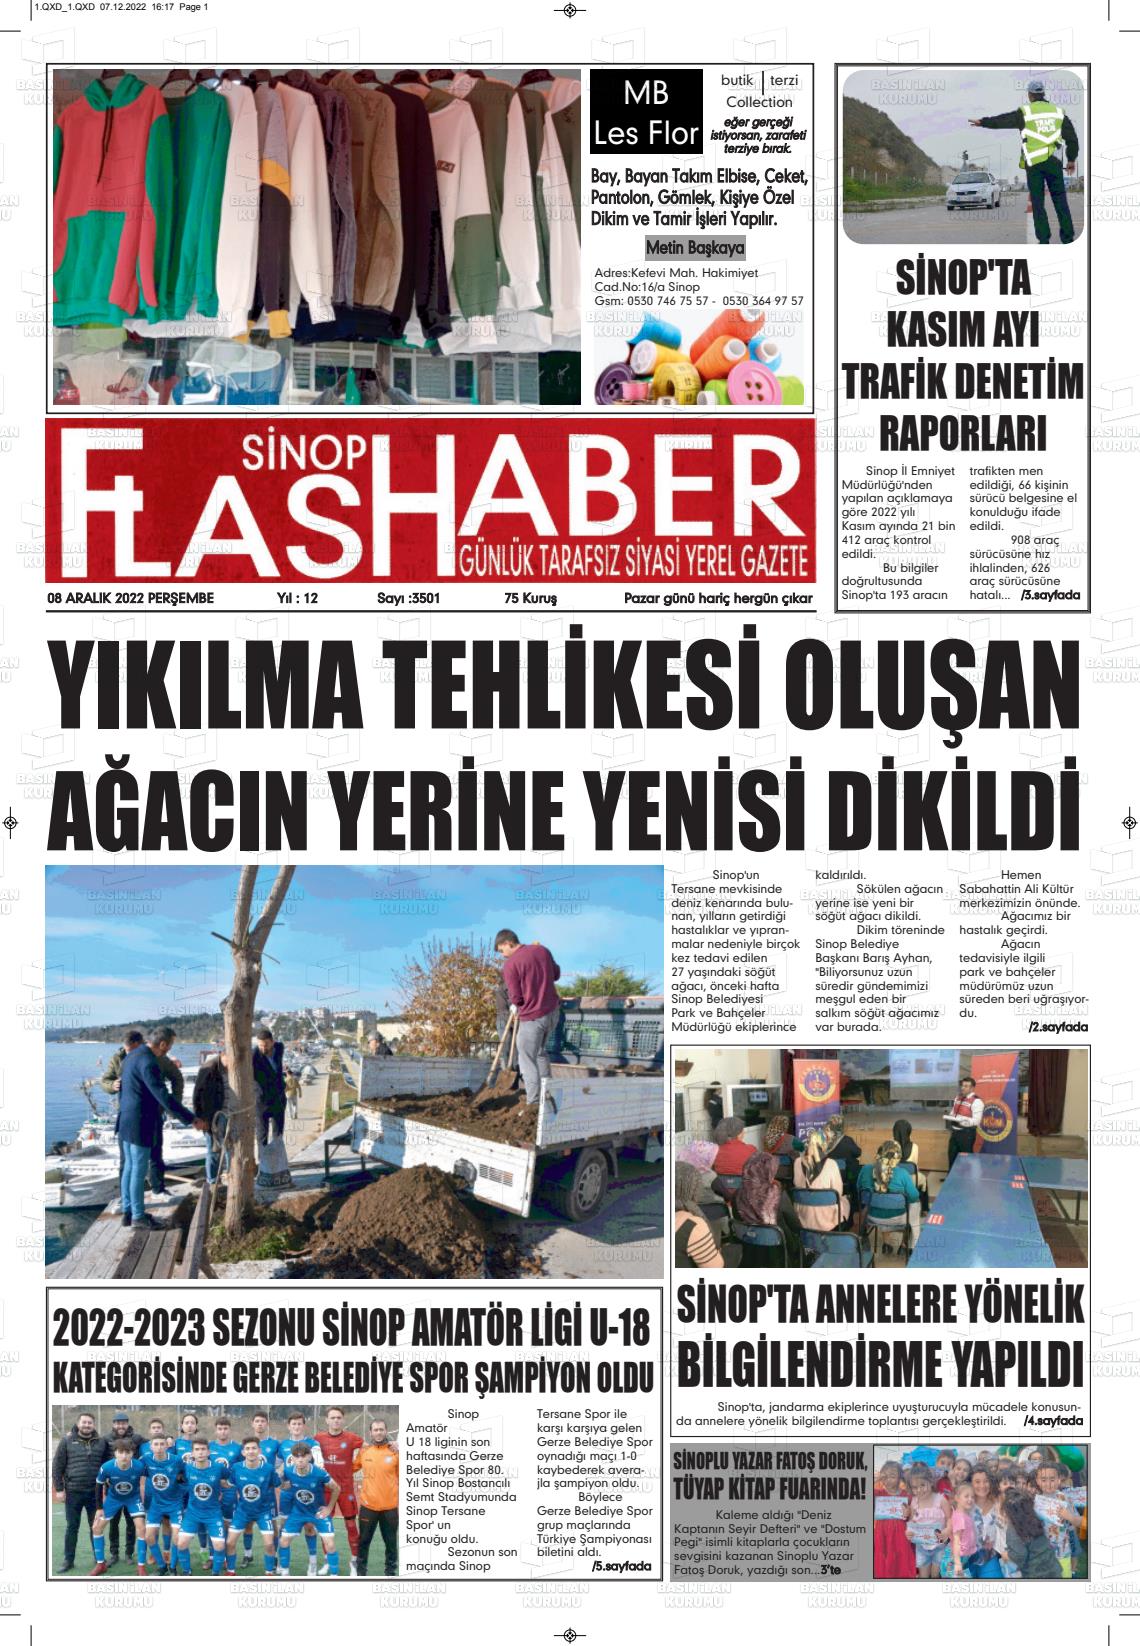 08 Aralık 2022 Sinop Flaş Haber Gazete Manşeti